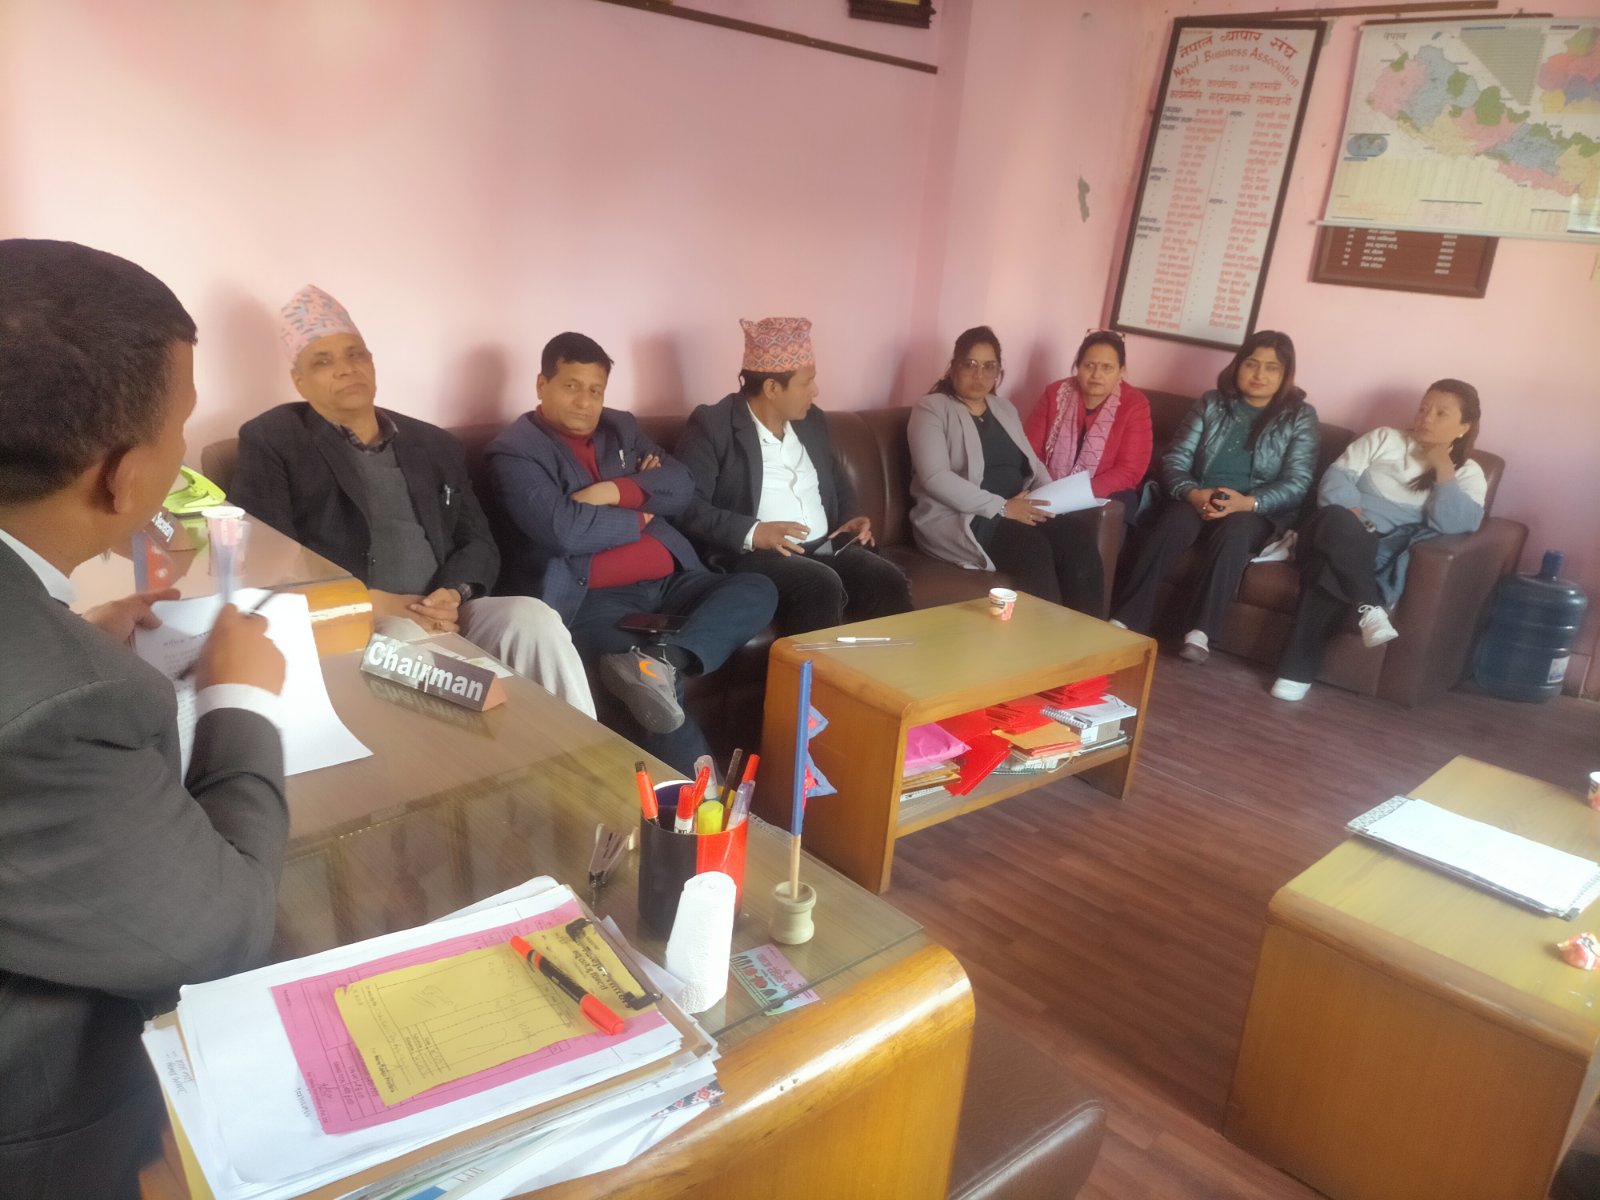 नेपाल व्यापार संघको साधारण सभा तथा बनभोज कार्यक्रम फागुन ५ गते, अर्थमन्त्री प्रमुख आतिथि